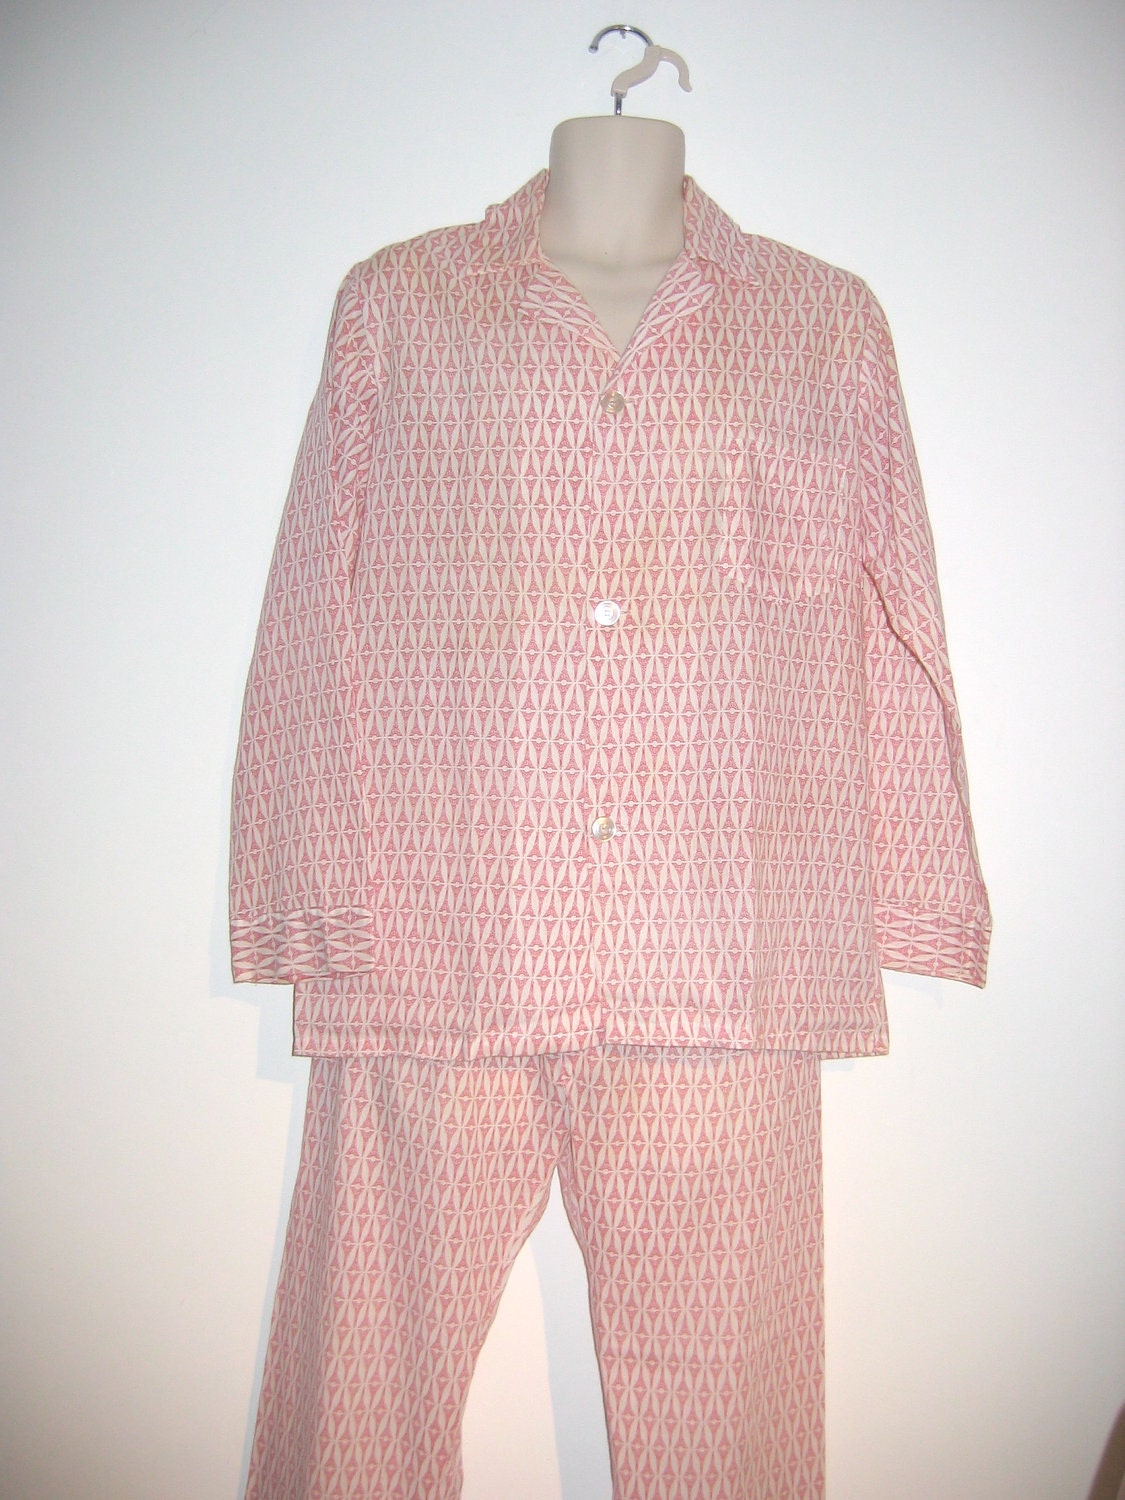 EIFFEL TOWER Vintage Men's Pajamas. Size small medium.